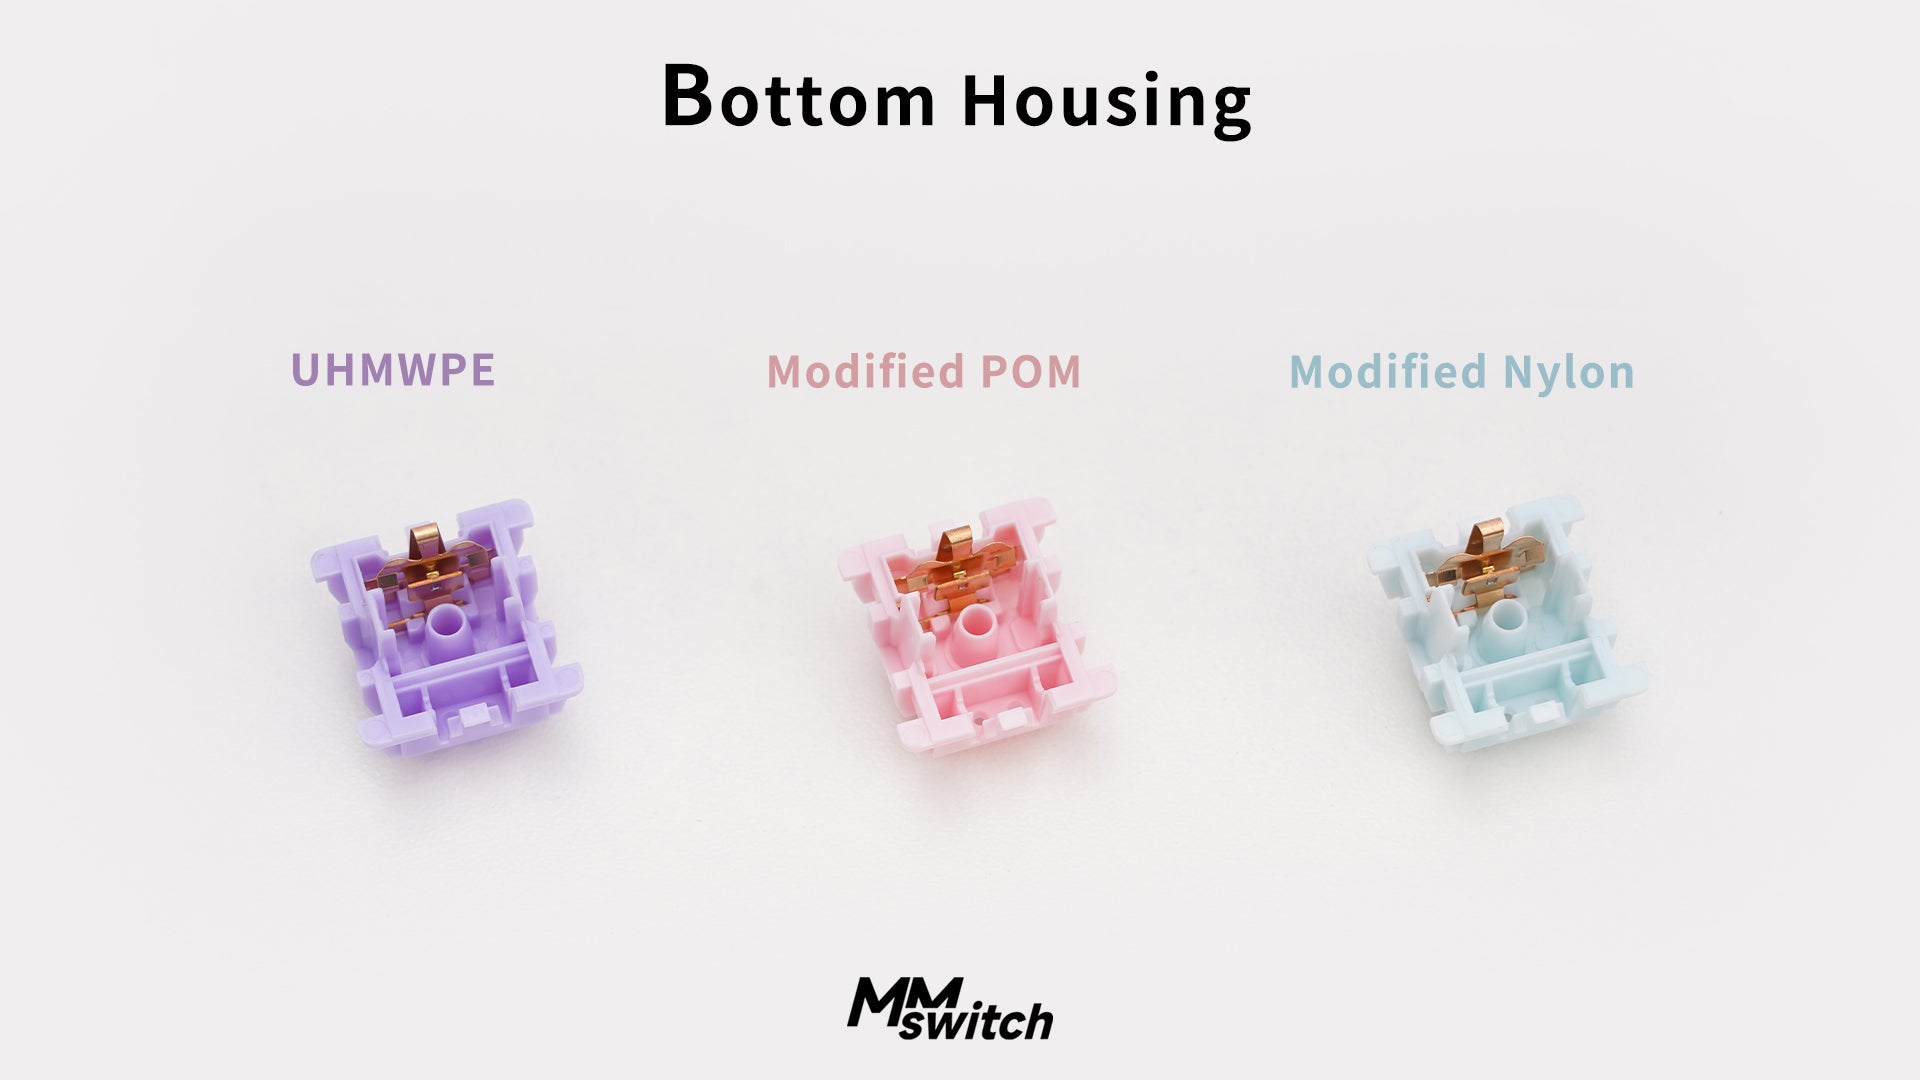 MMswitch - Pastel Bottom Housings